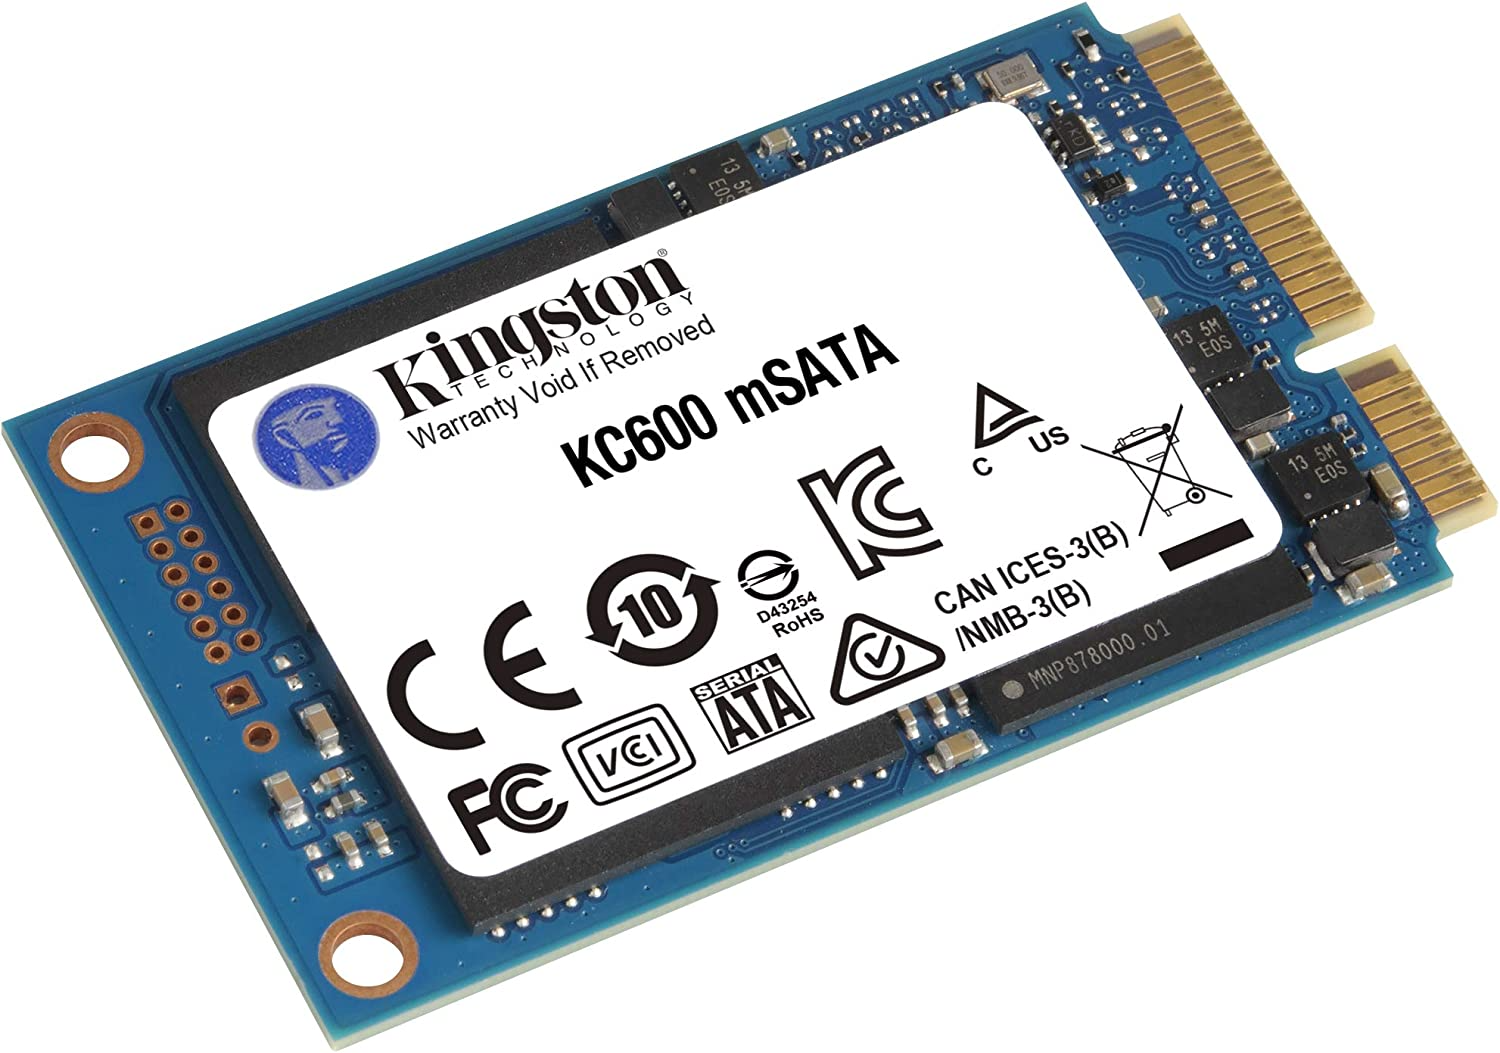 KINGSTON KC600 3D&#8221; 512GB mSATA INTERNAL SSD - SKC600MS/512G